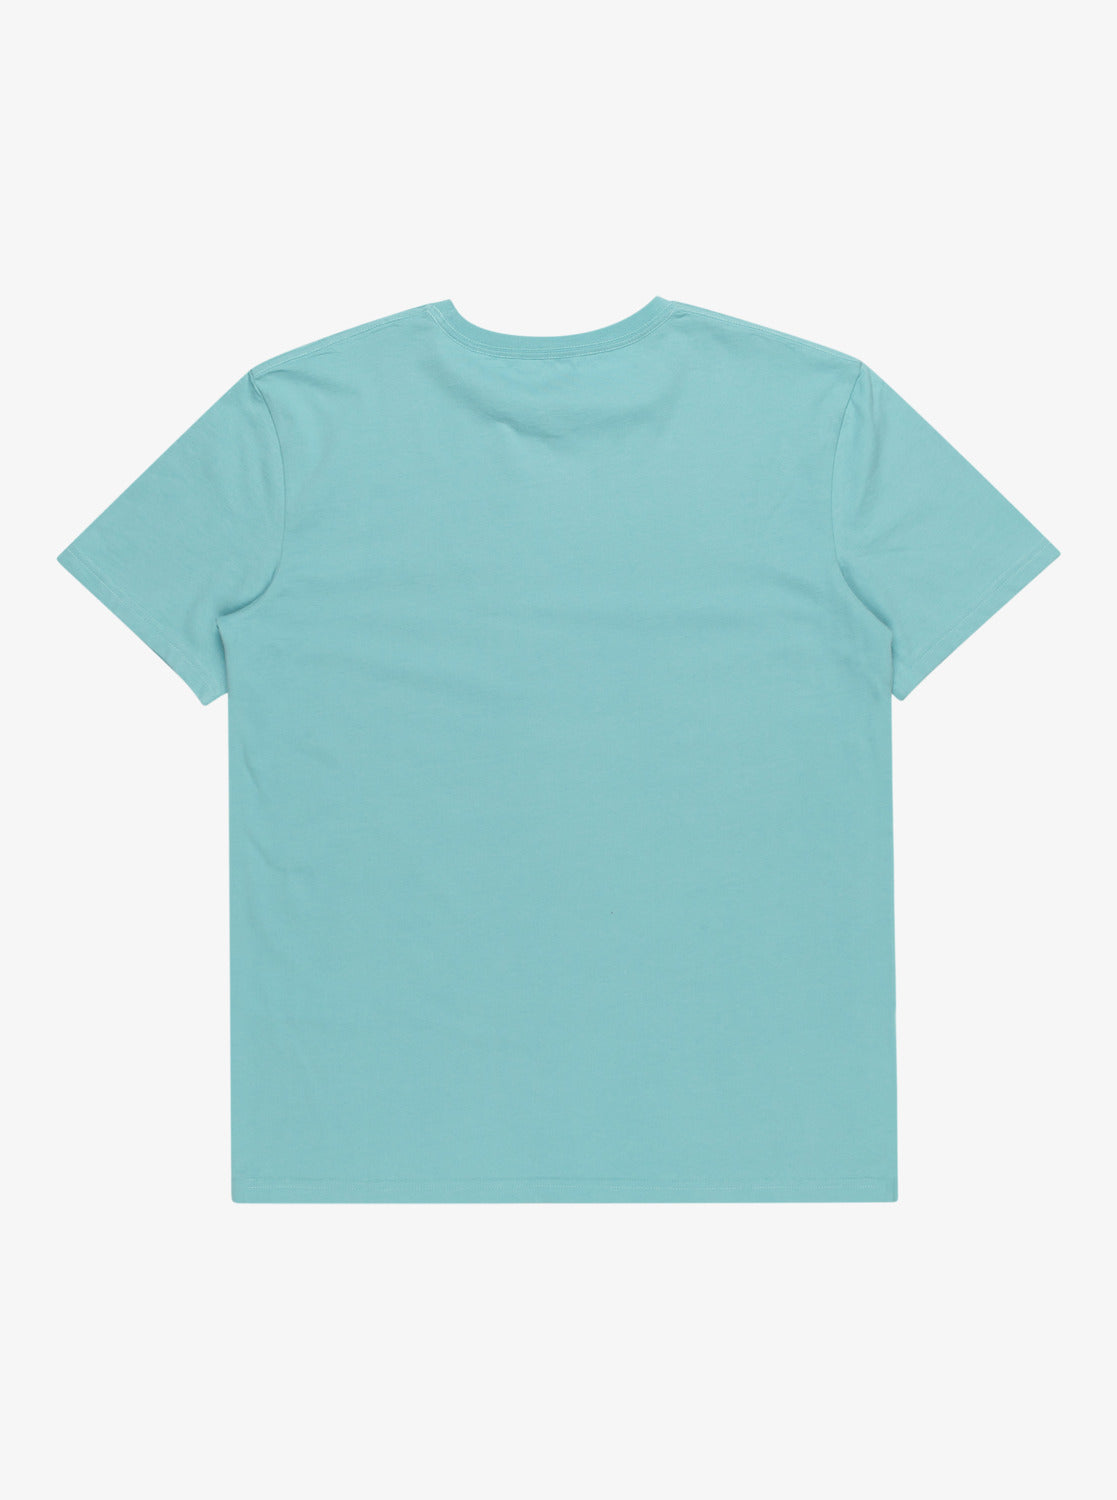  Mini - T-Shirt for Men  EQYZT07657; Mini - T-Shirt for Men  EQYZT07657;;;;;;;;